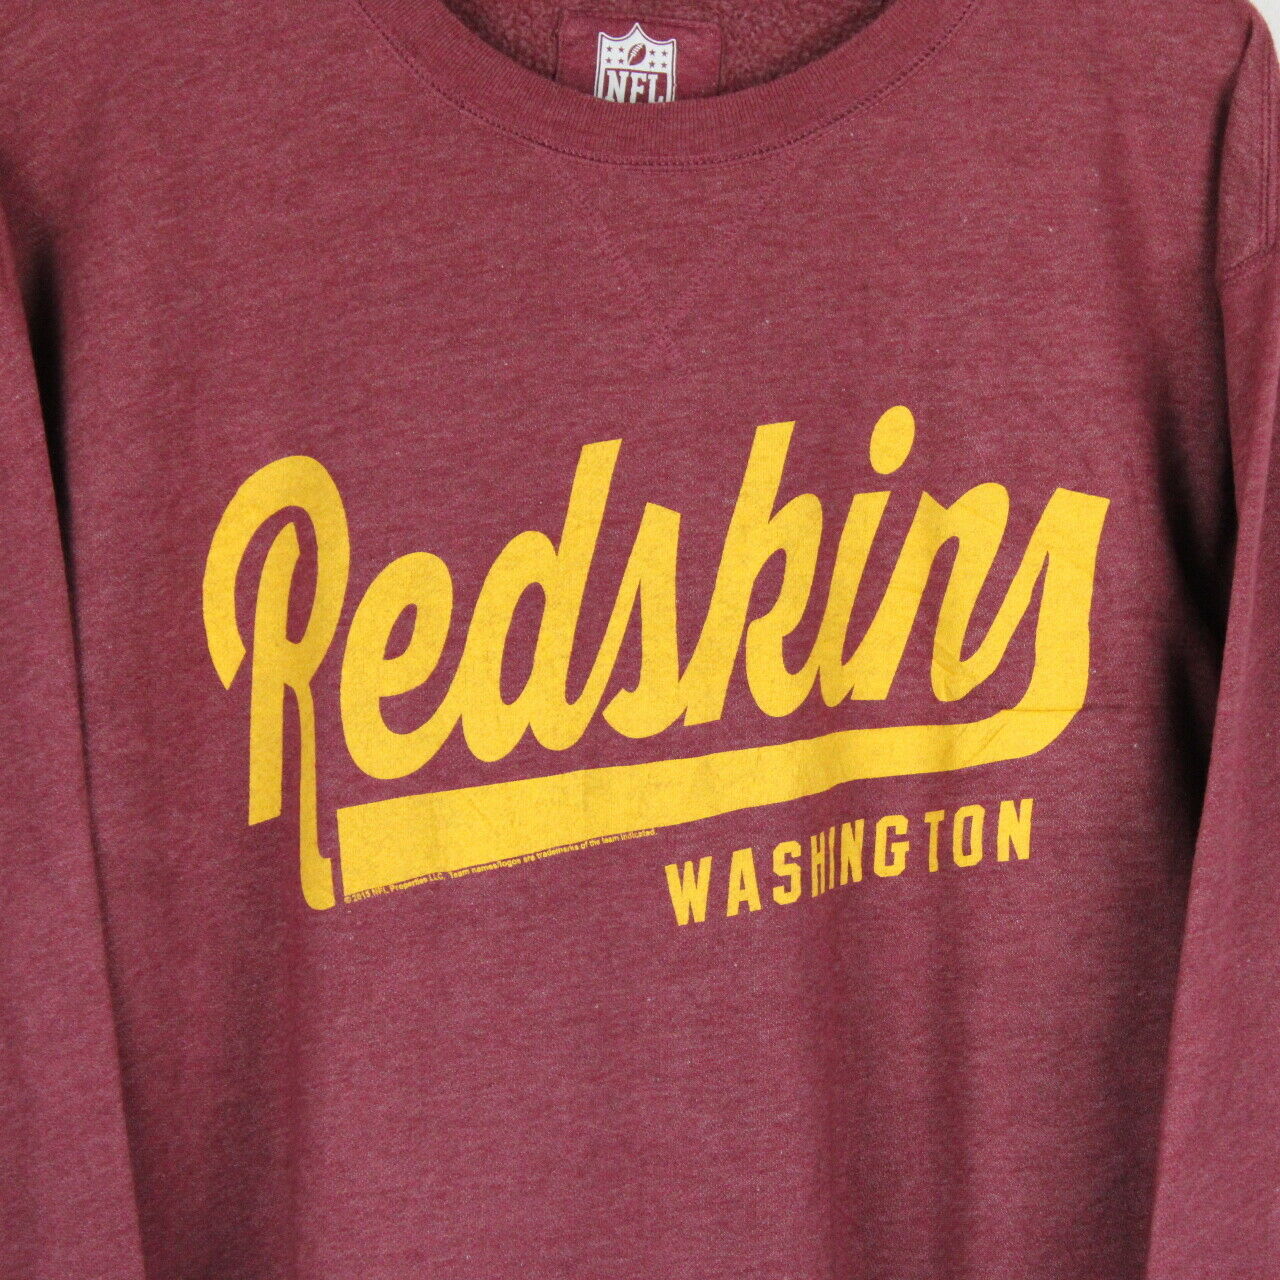 NFL Washington REDSKINS Sweatshirt | XL